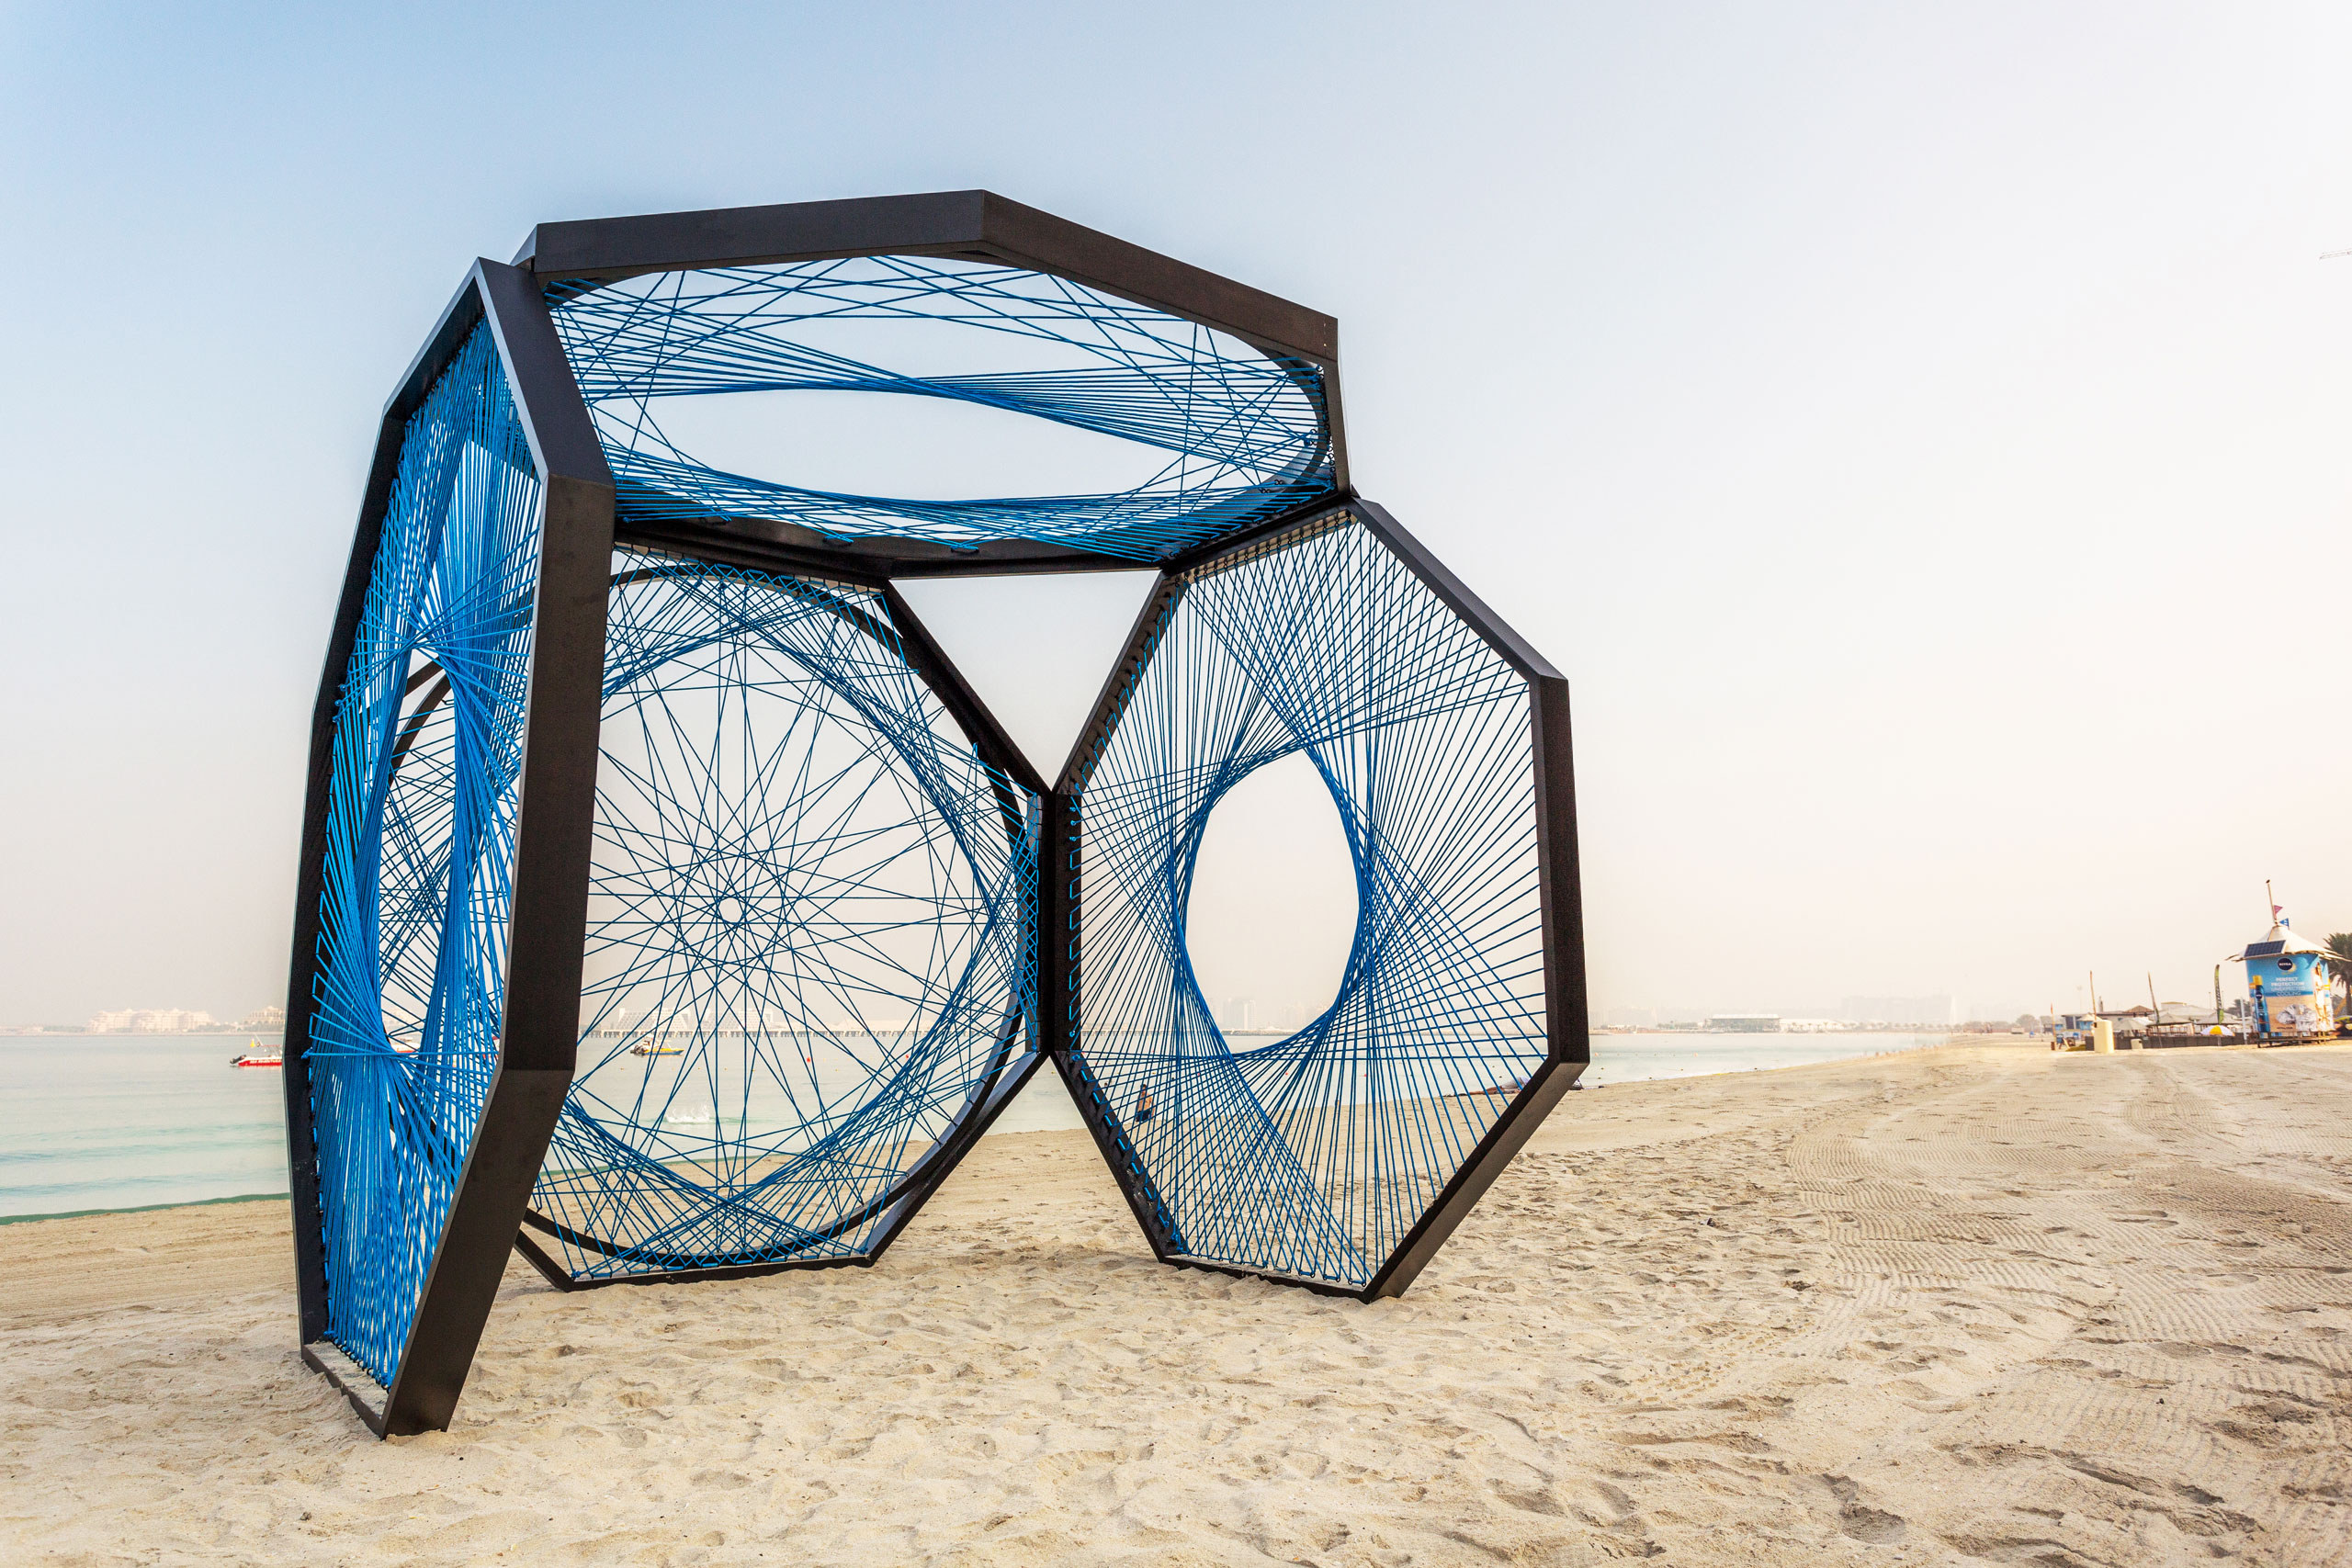 Yaroof installation by Aljoud Lootah. At The Beach, Opposite JBR, Dubai. 